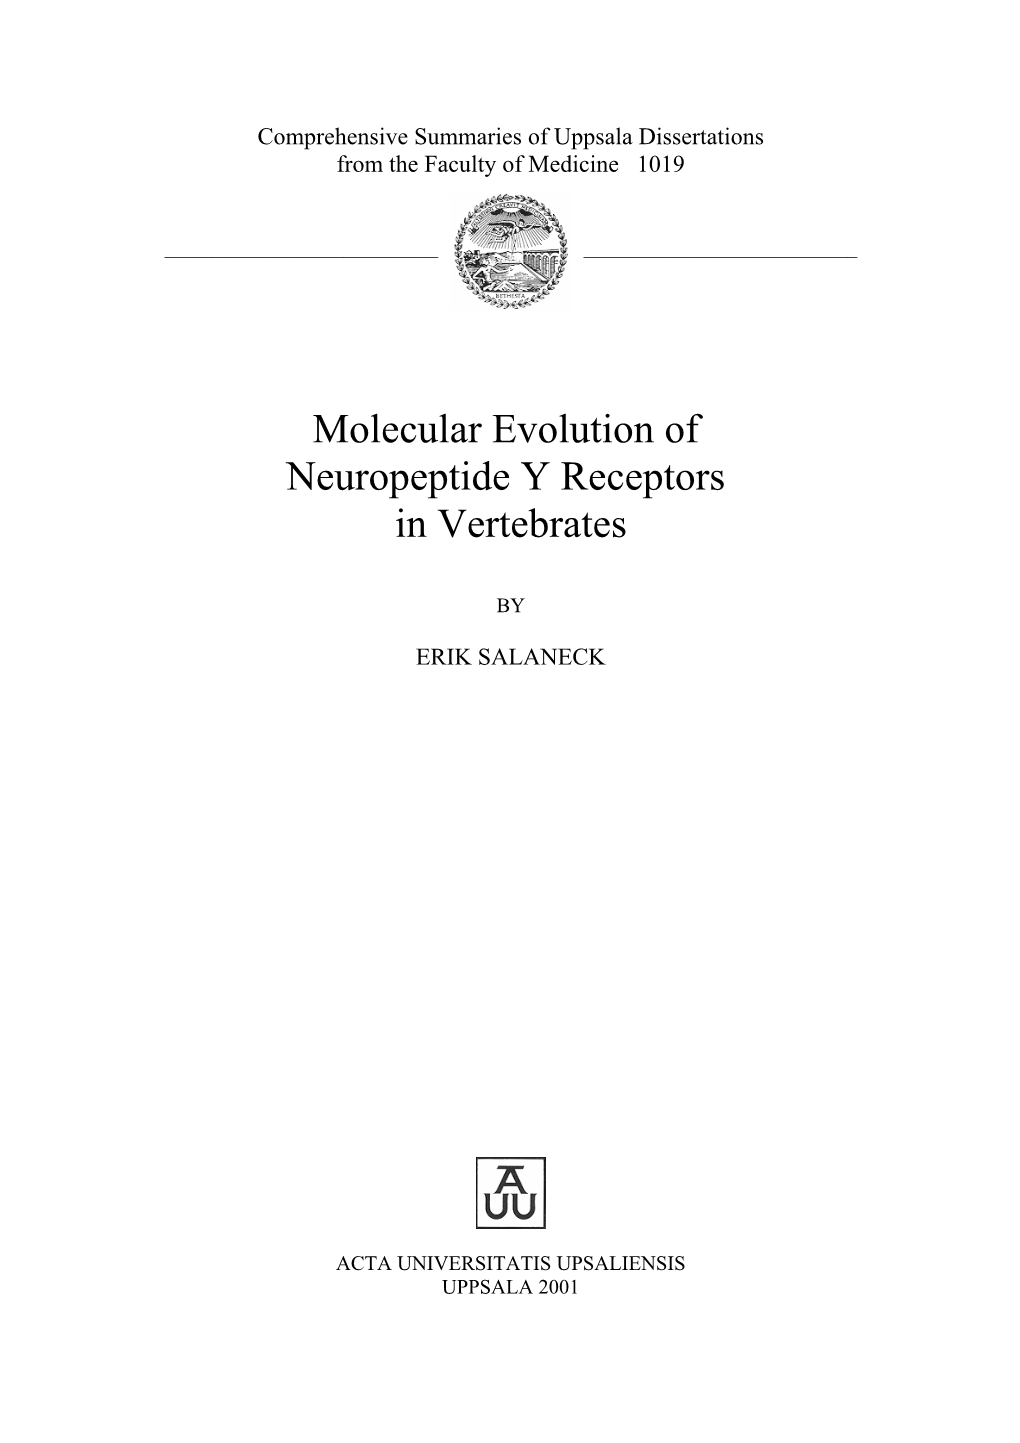 Molecular Evolution of Neuropeptide Y Receptors in Vertebrates